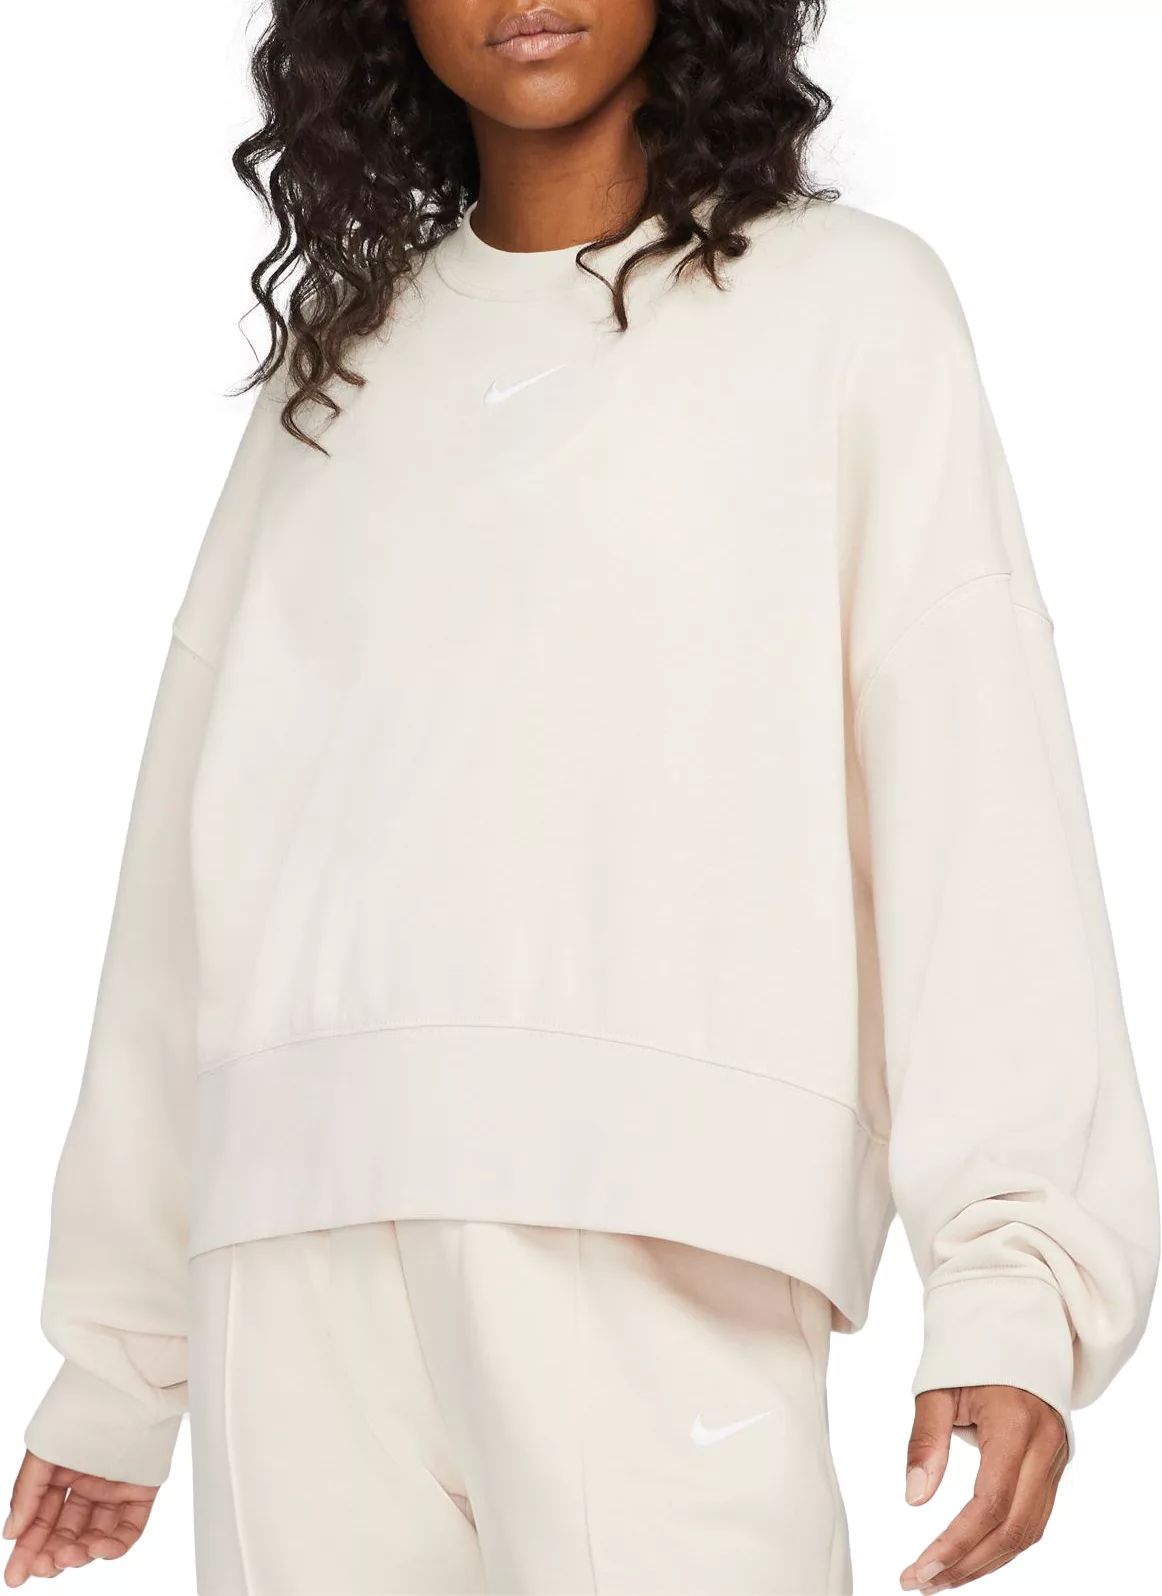 Nike Women's Sportswear Essentials Oversized Fleece Crewneck Sweatshirt, Small, Pearl White | Dick's Sporting Goods